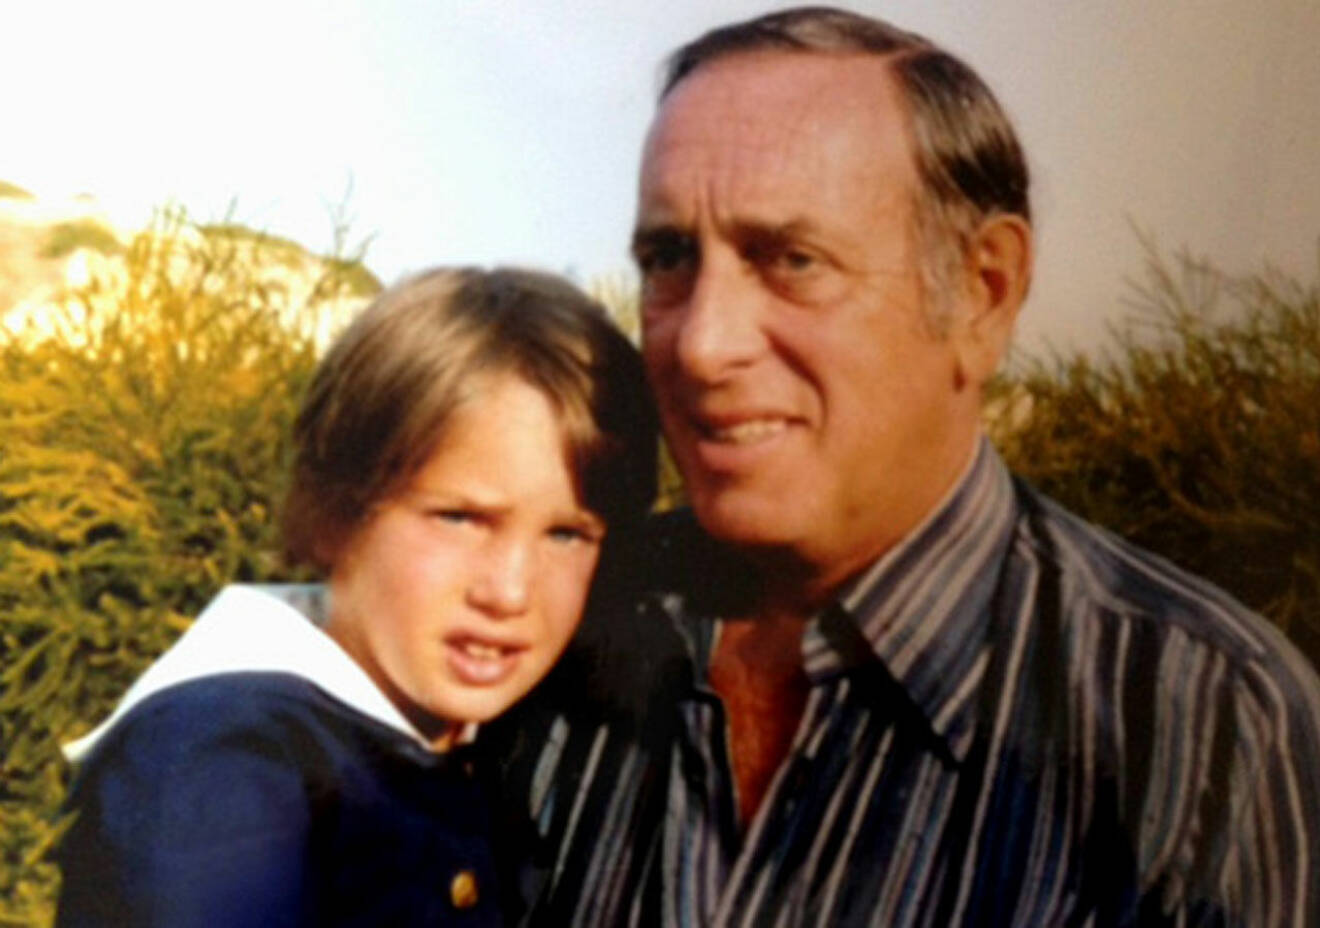 Chris med pappa Paul, en bild ur familjen O'Neill privata familjealbum.